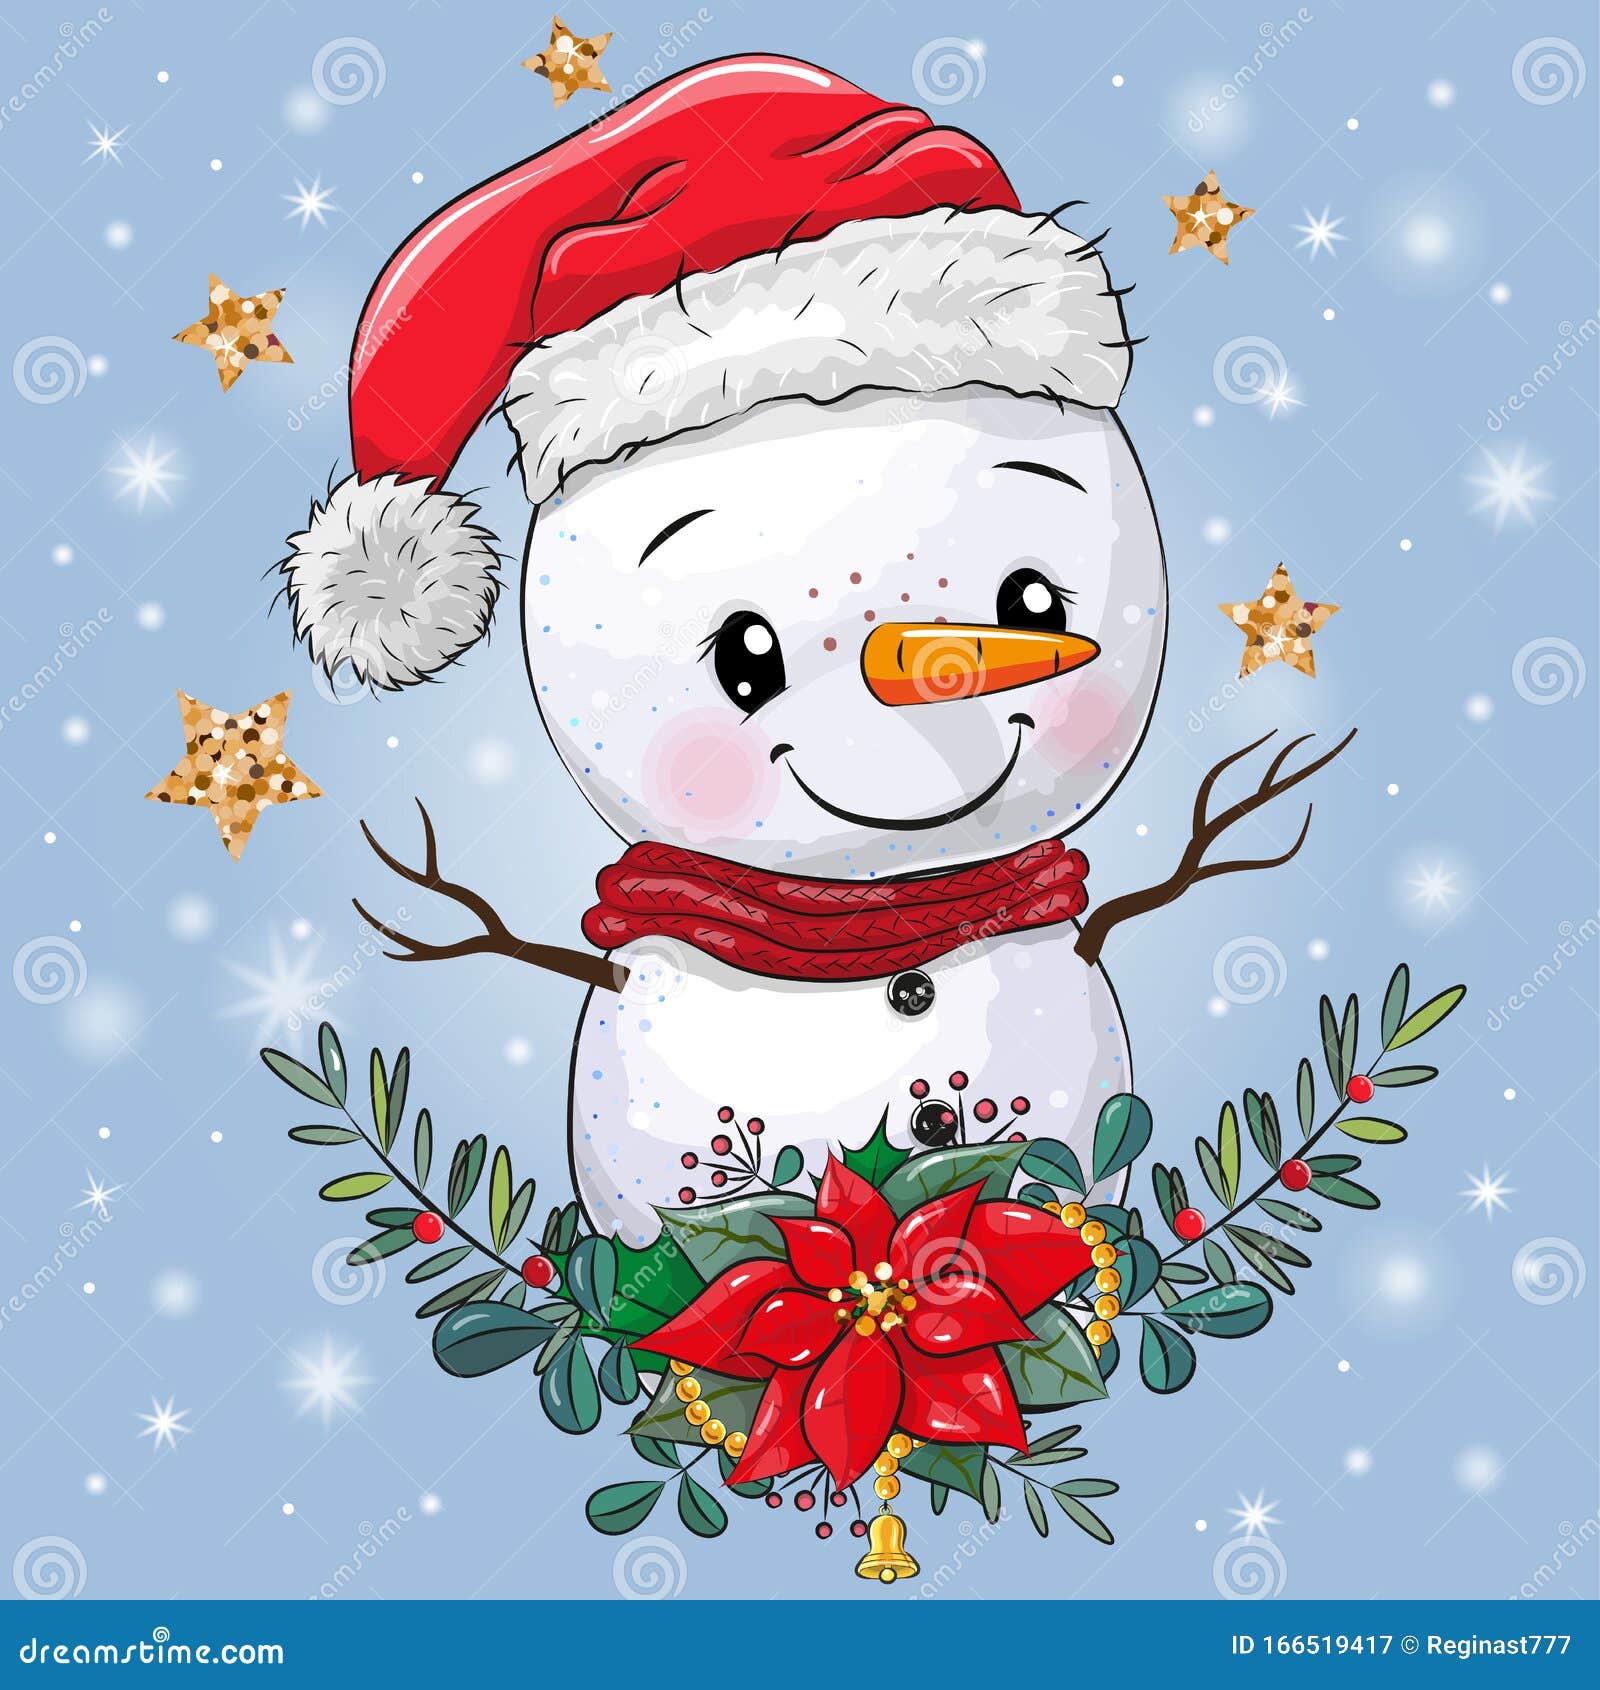 Cute Cartoon Snowman With Christmas Wreath Stock Vector Illustration Of Decoration Cute